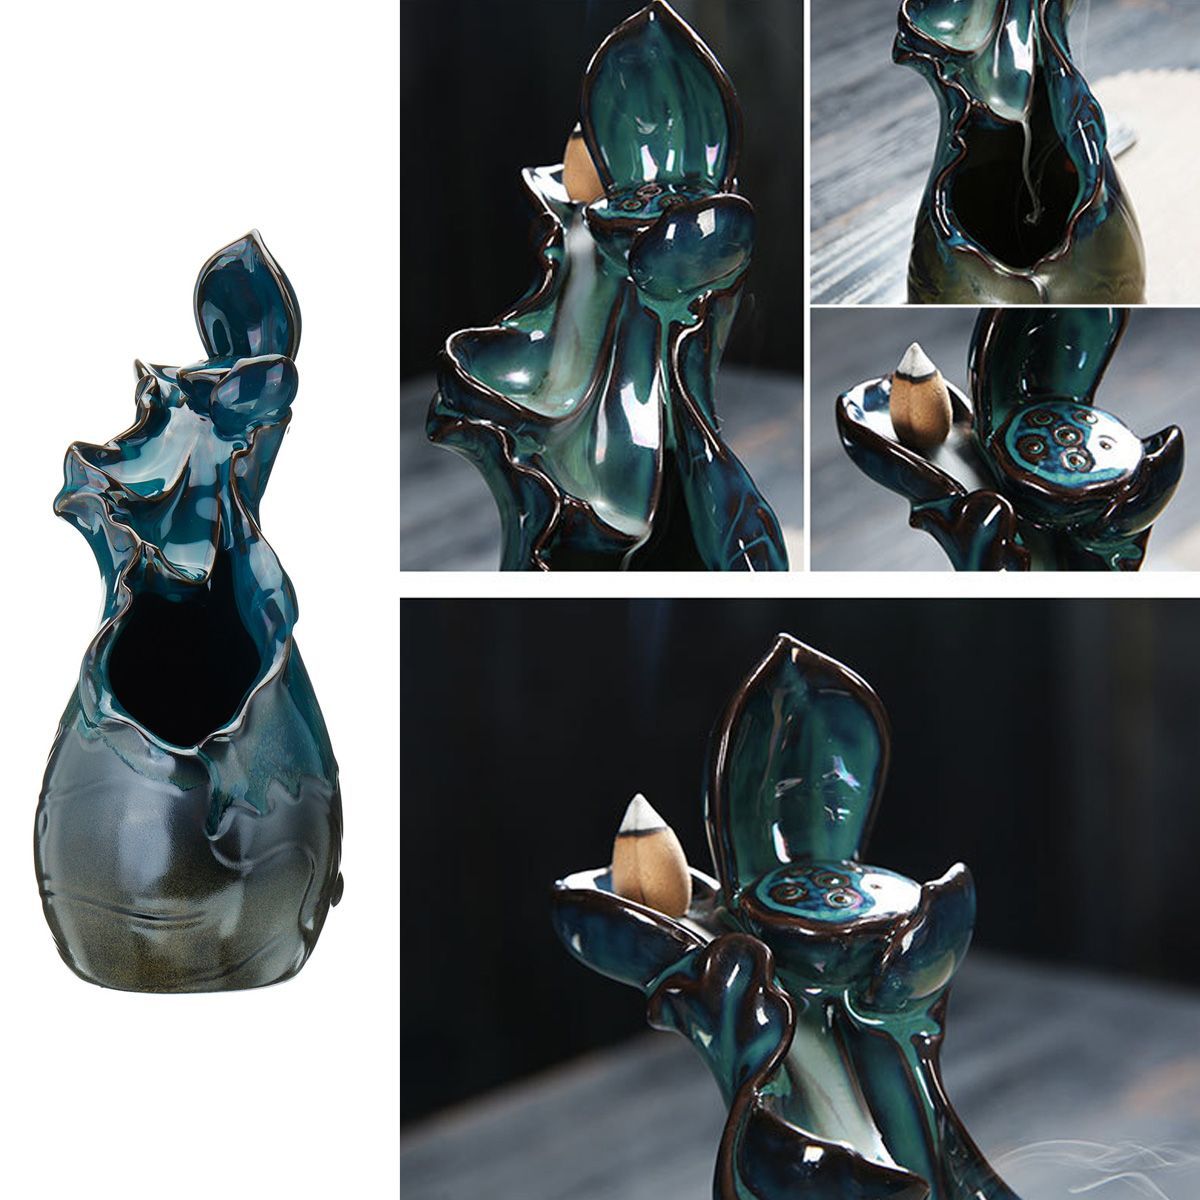 Home-Decor-Ceramic-Backflow-Incense-Burner-Yoga-Aromatherapy-Sandalwood-Cone-Desktop-Gifts-1445389